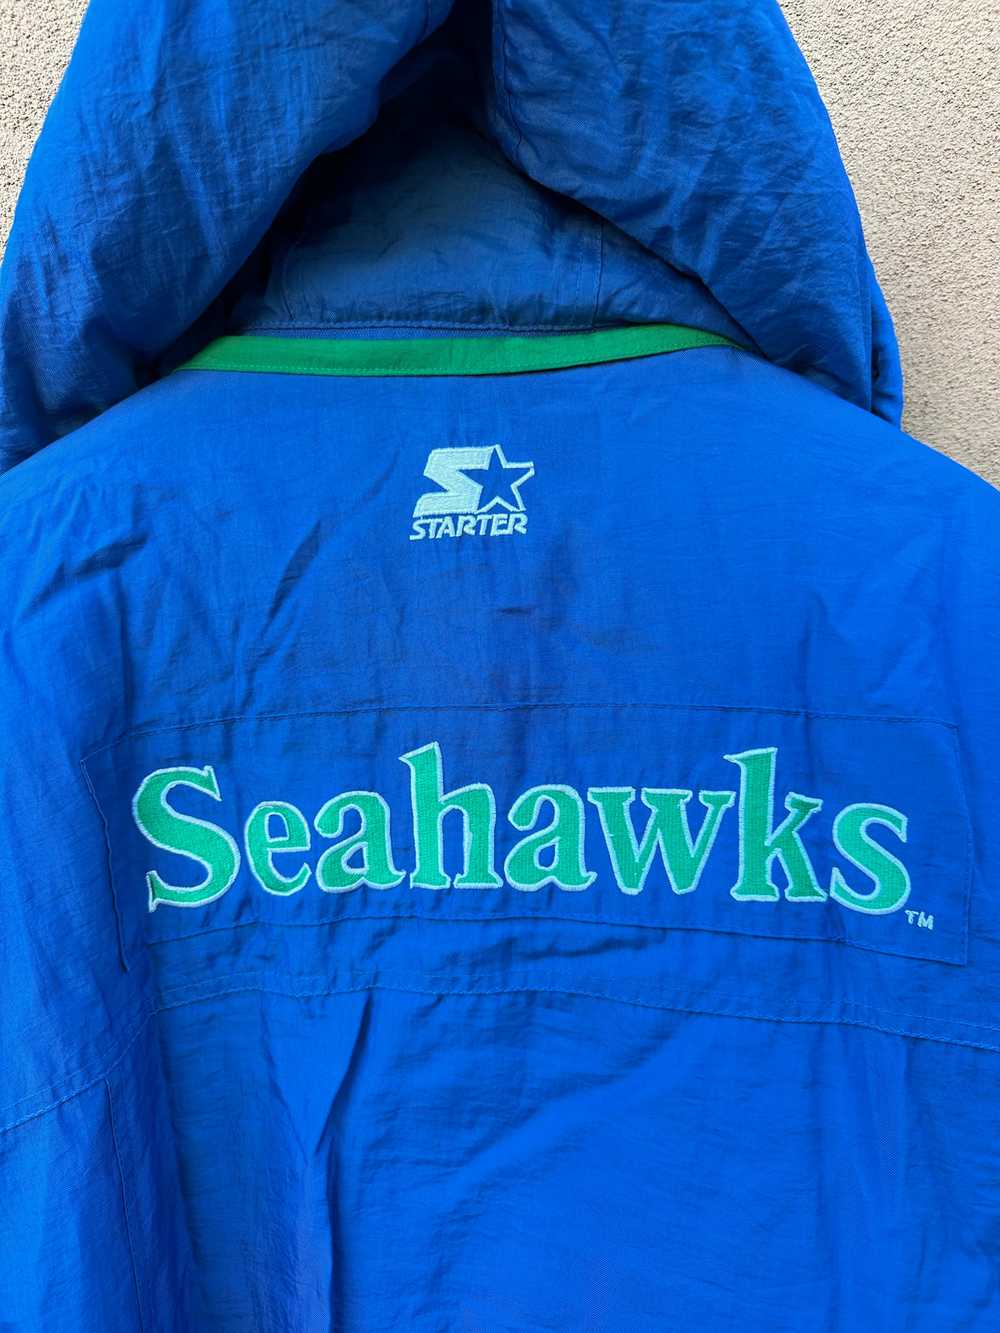 Seattle Seahawks Pro Line Jacket - image 5